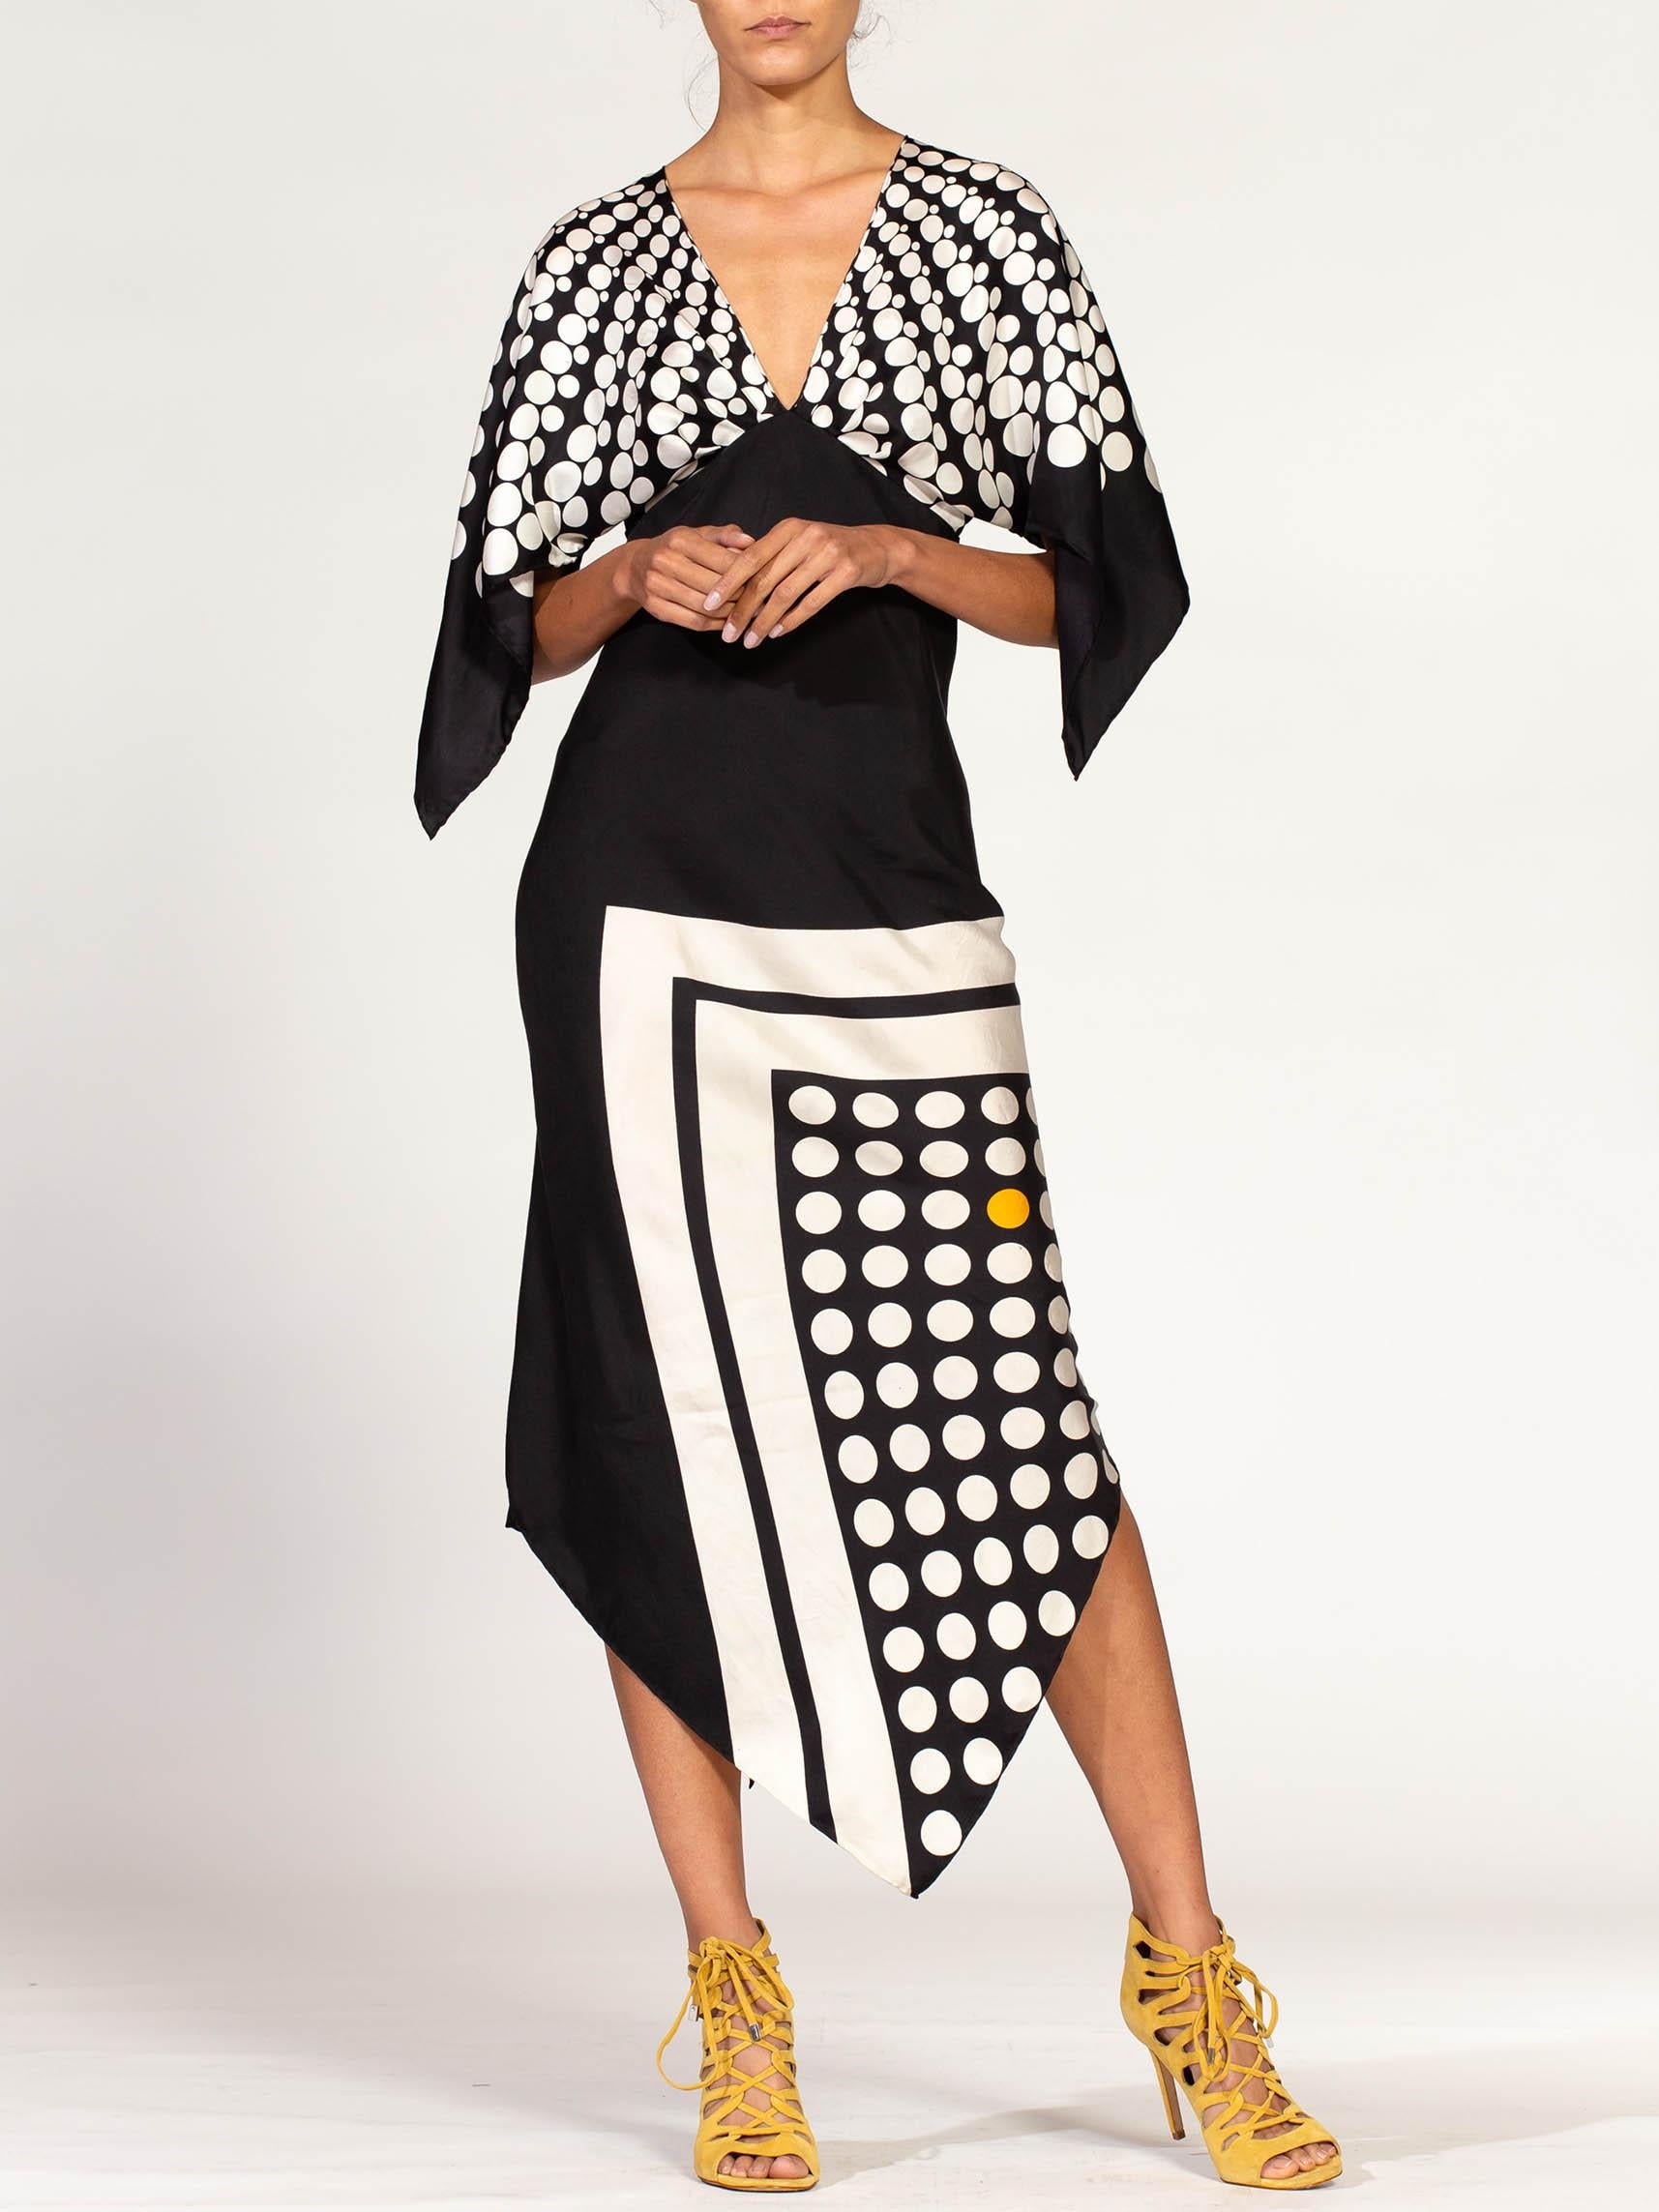 MORPHEW COLLECTION Black & White Bias Cut Silk Twill Two-Scarf Dress 6